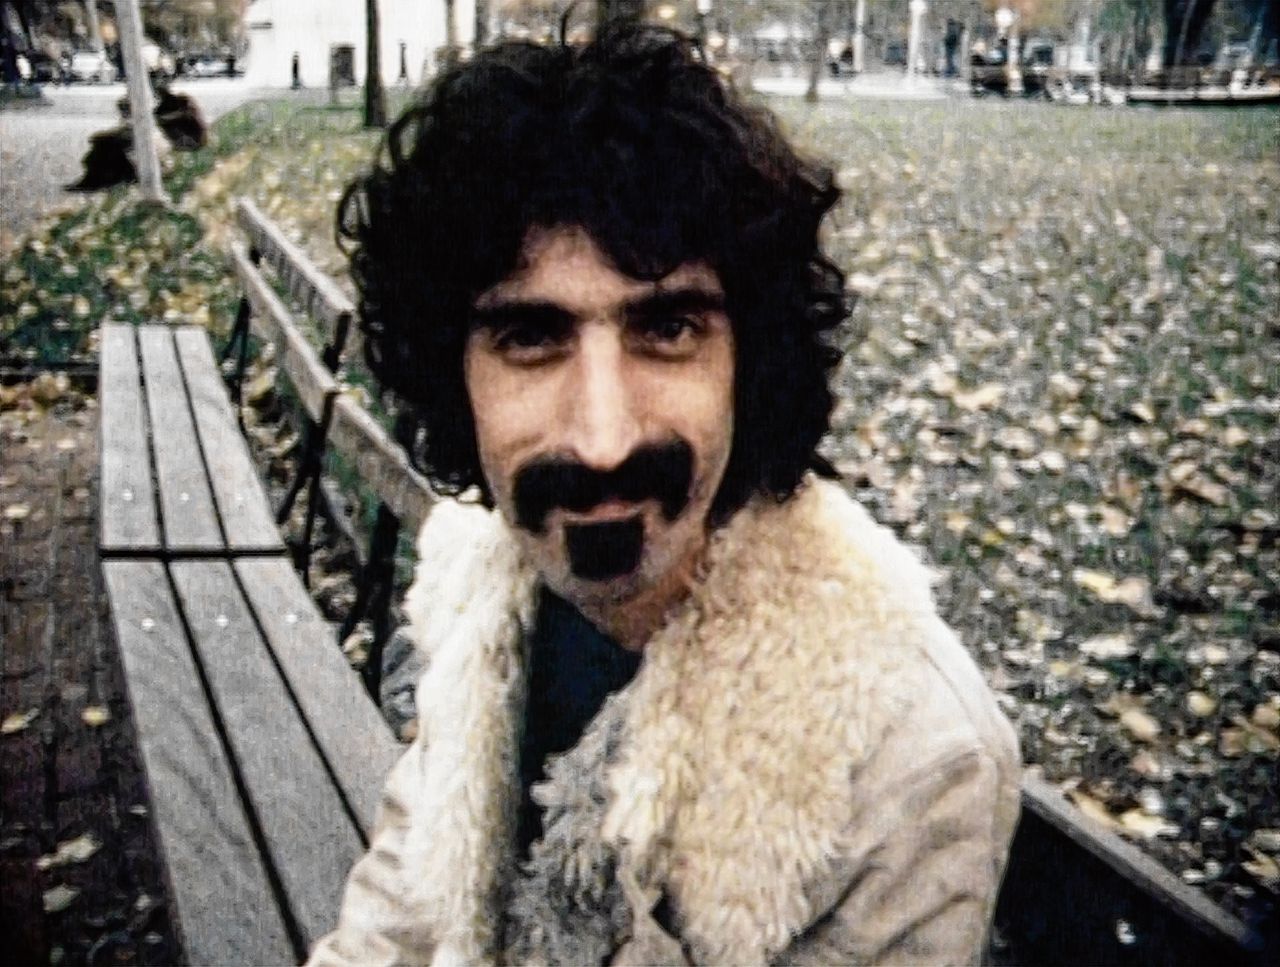 Weduwe Gail Zappa gaf filmmaker Alex Winter toegang tot het archief van haar man, muzikant Frank Zappa.